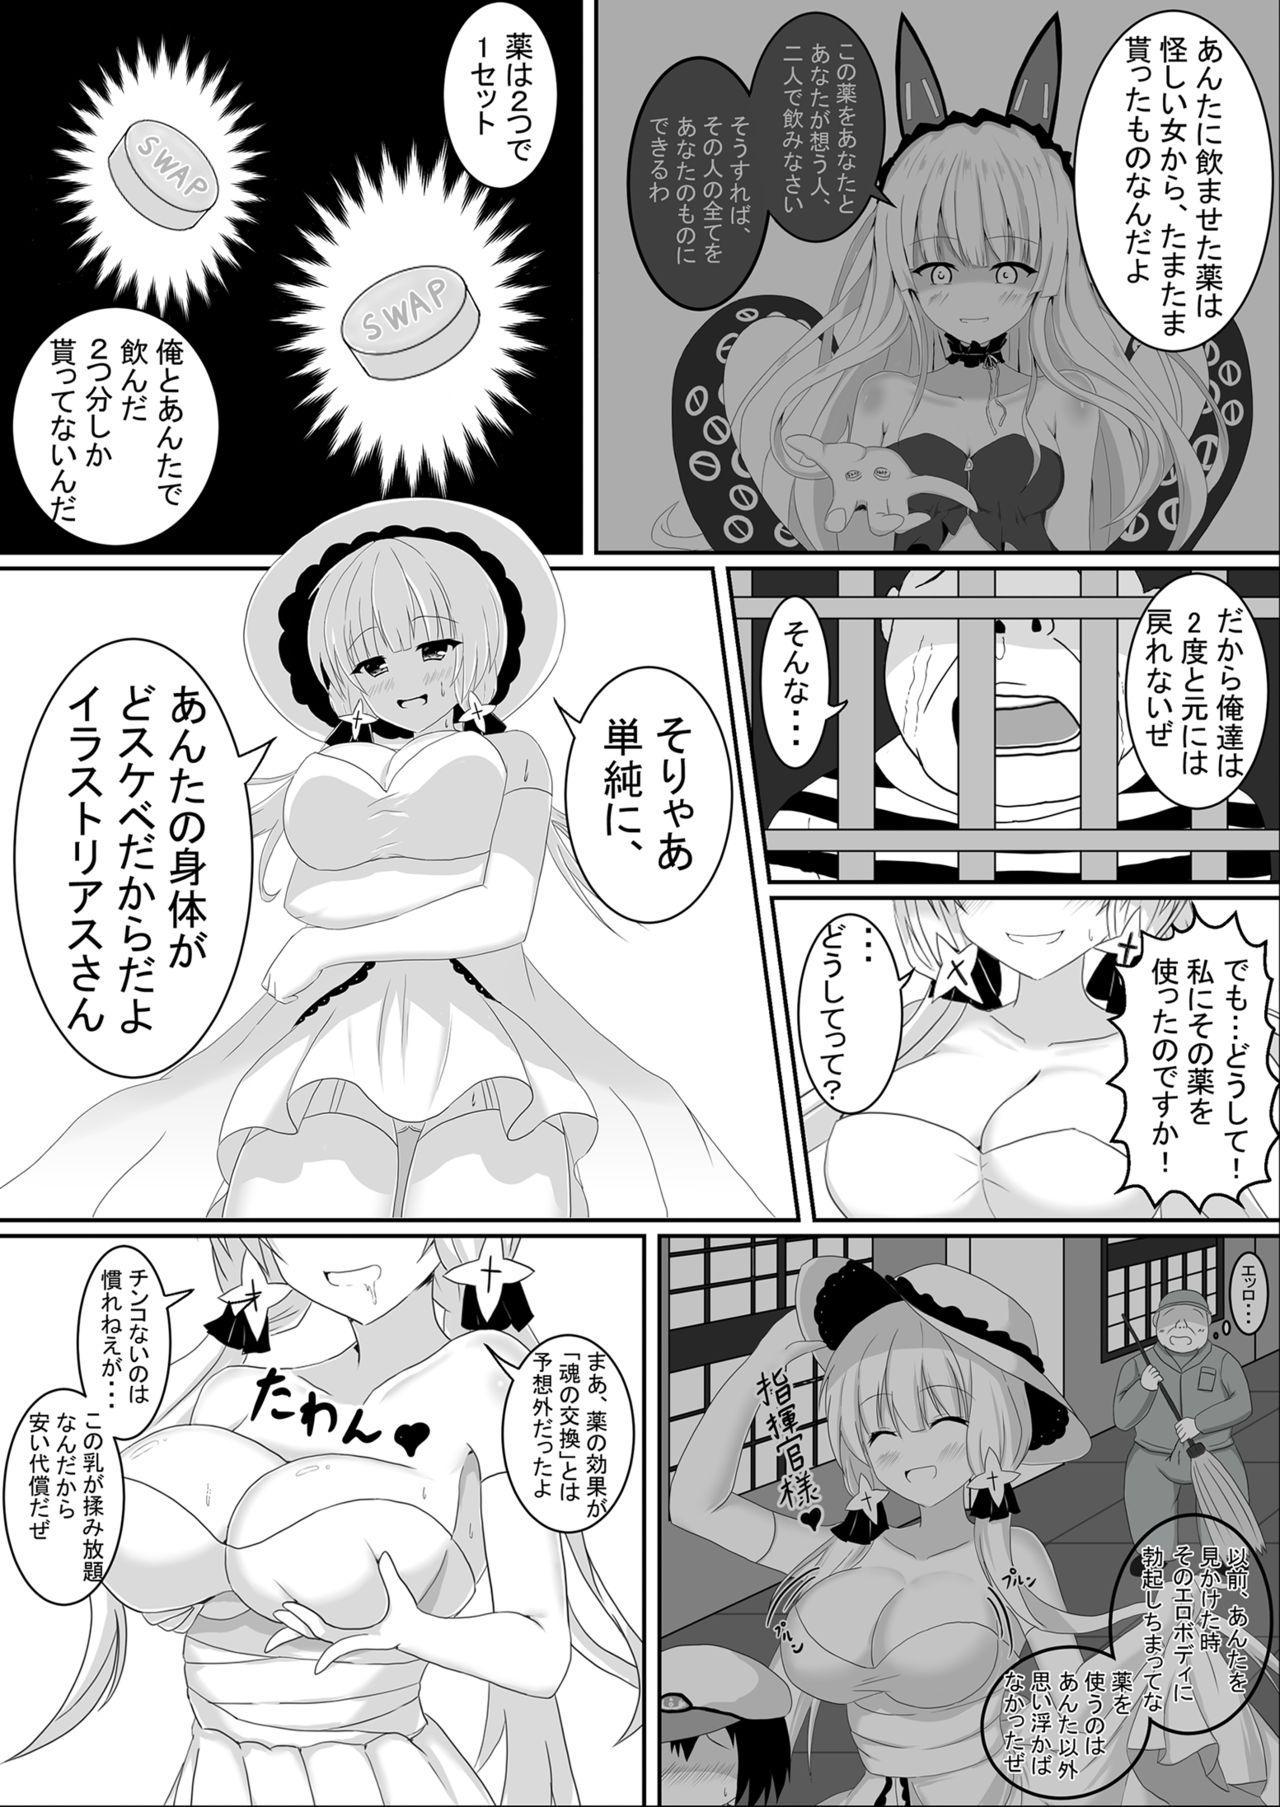 Peludo Irekawari, Hyoui E Fukusuumai 3 - Azur lane Public Nudity - Page 5